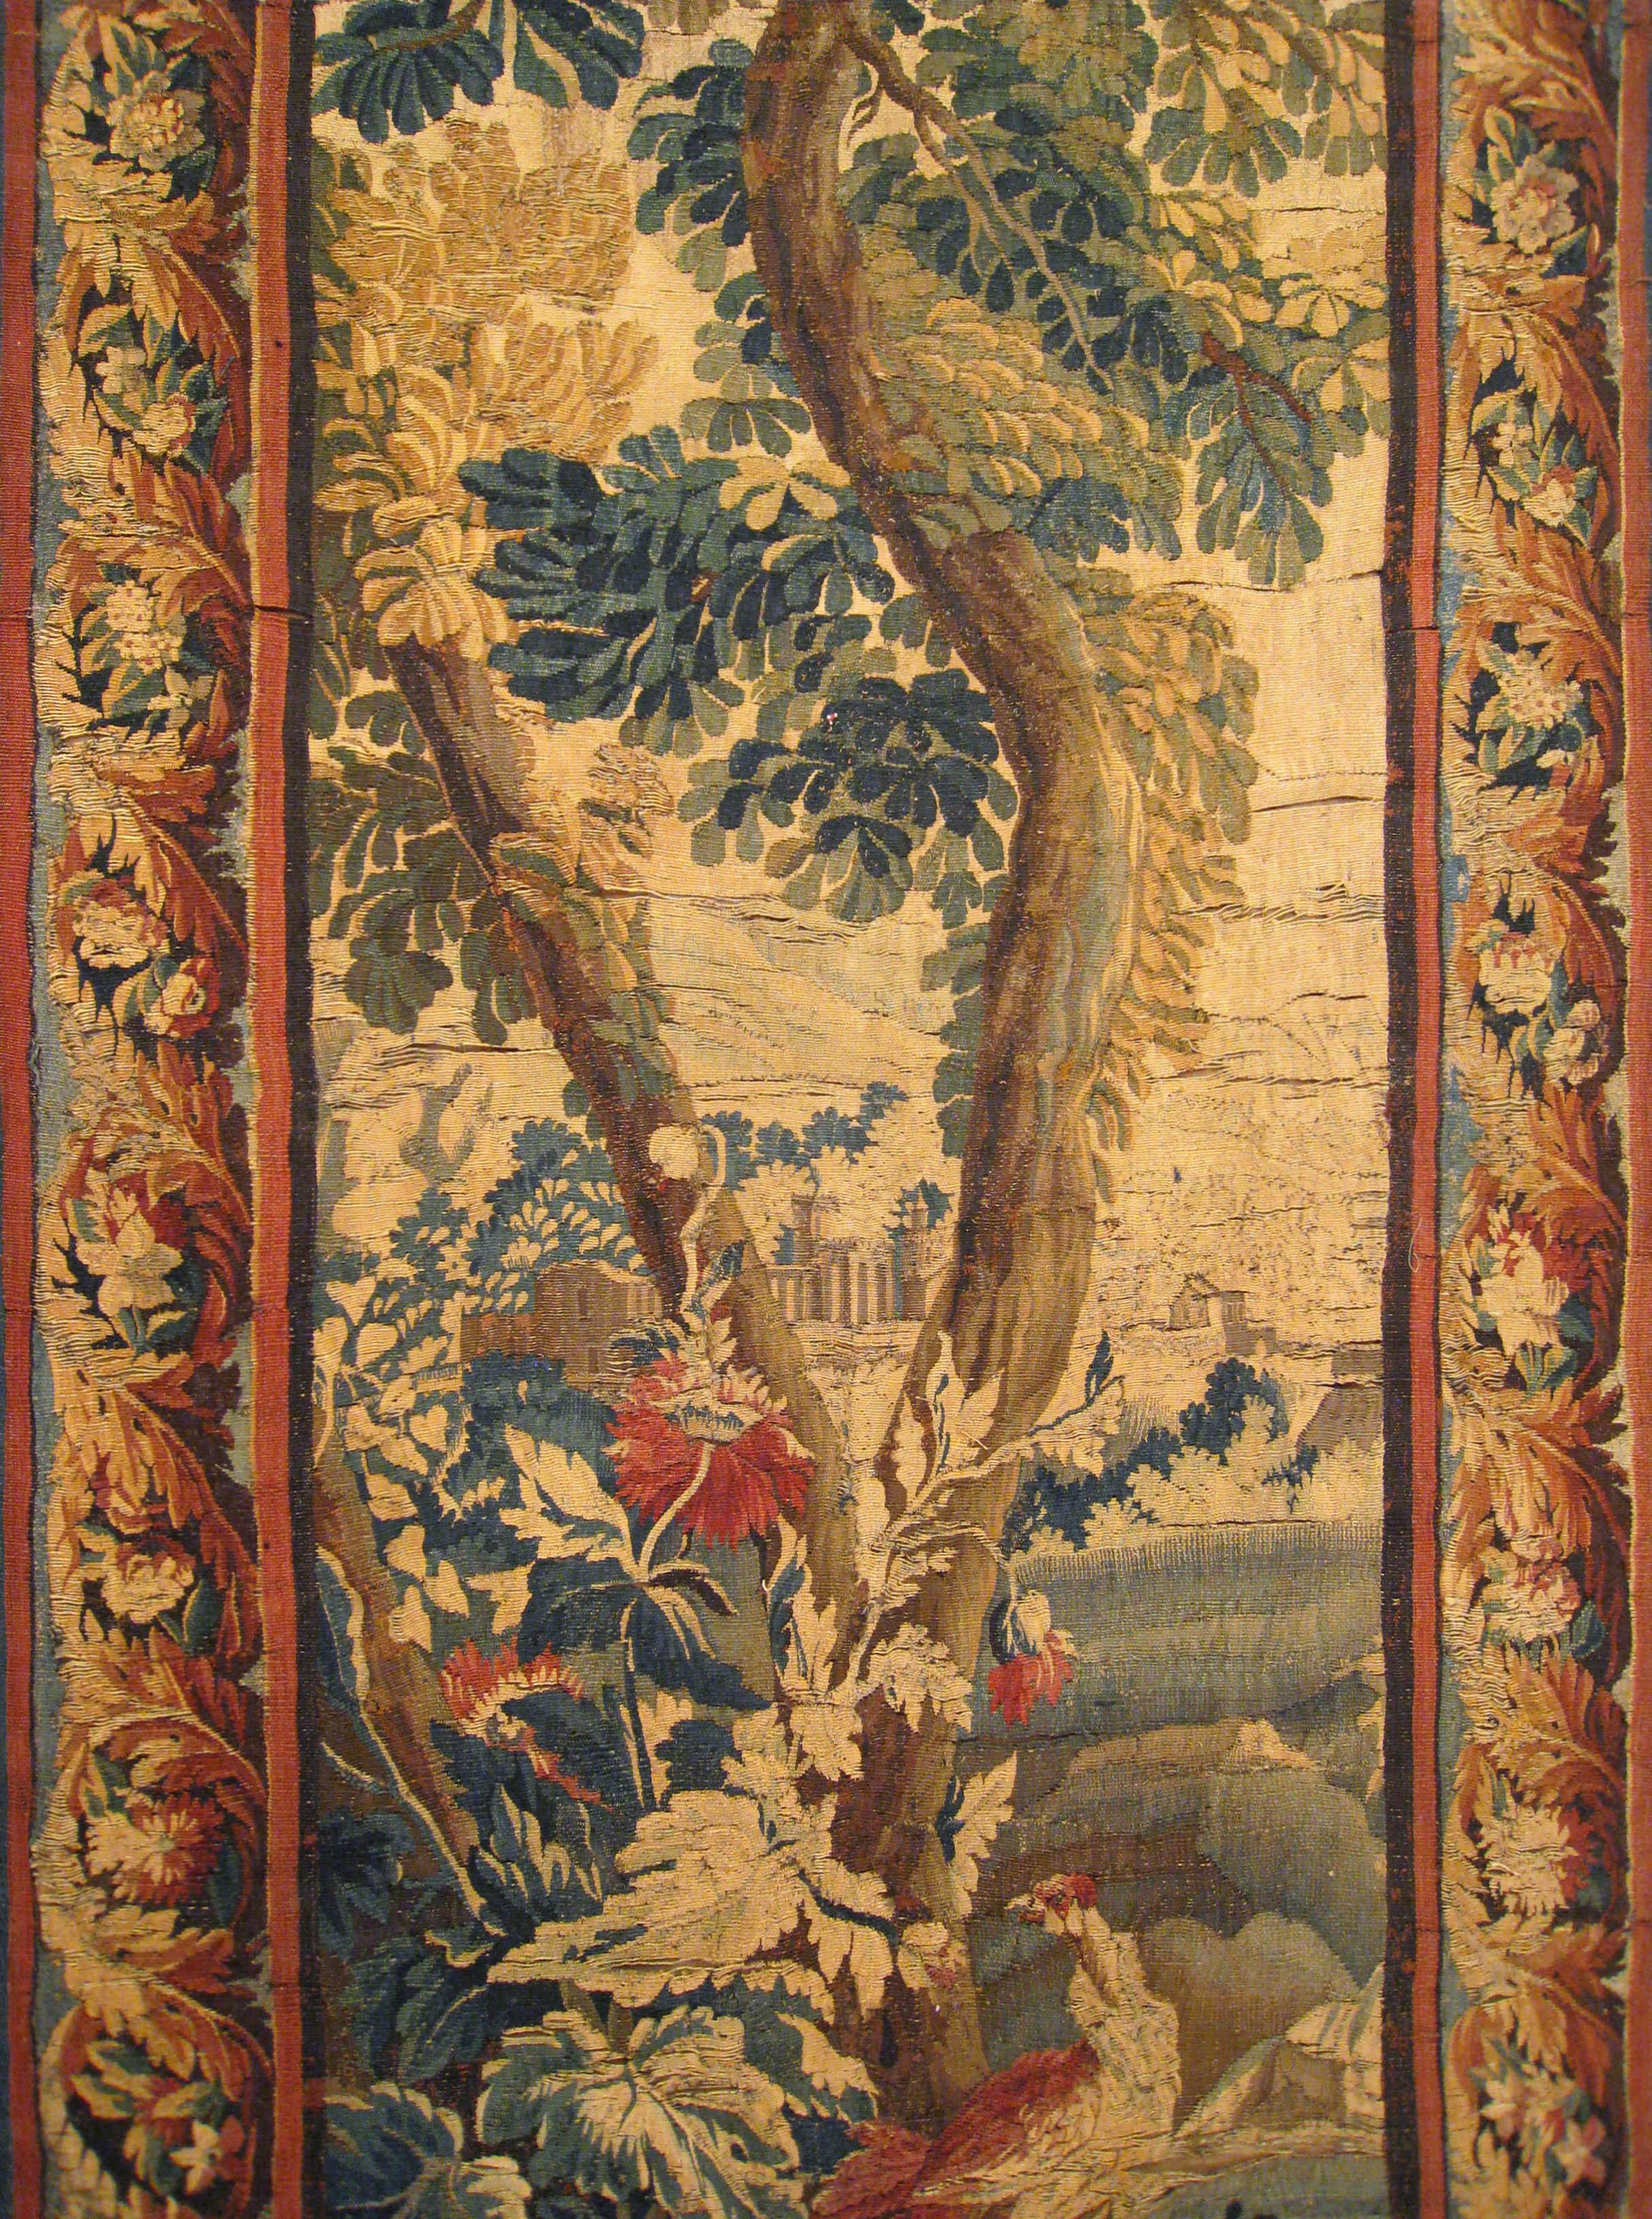 Hand-Woven 18th Century Flemish Verdure Tapestry